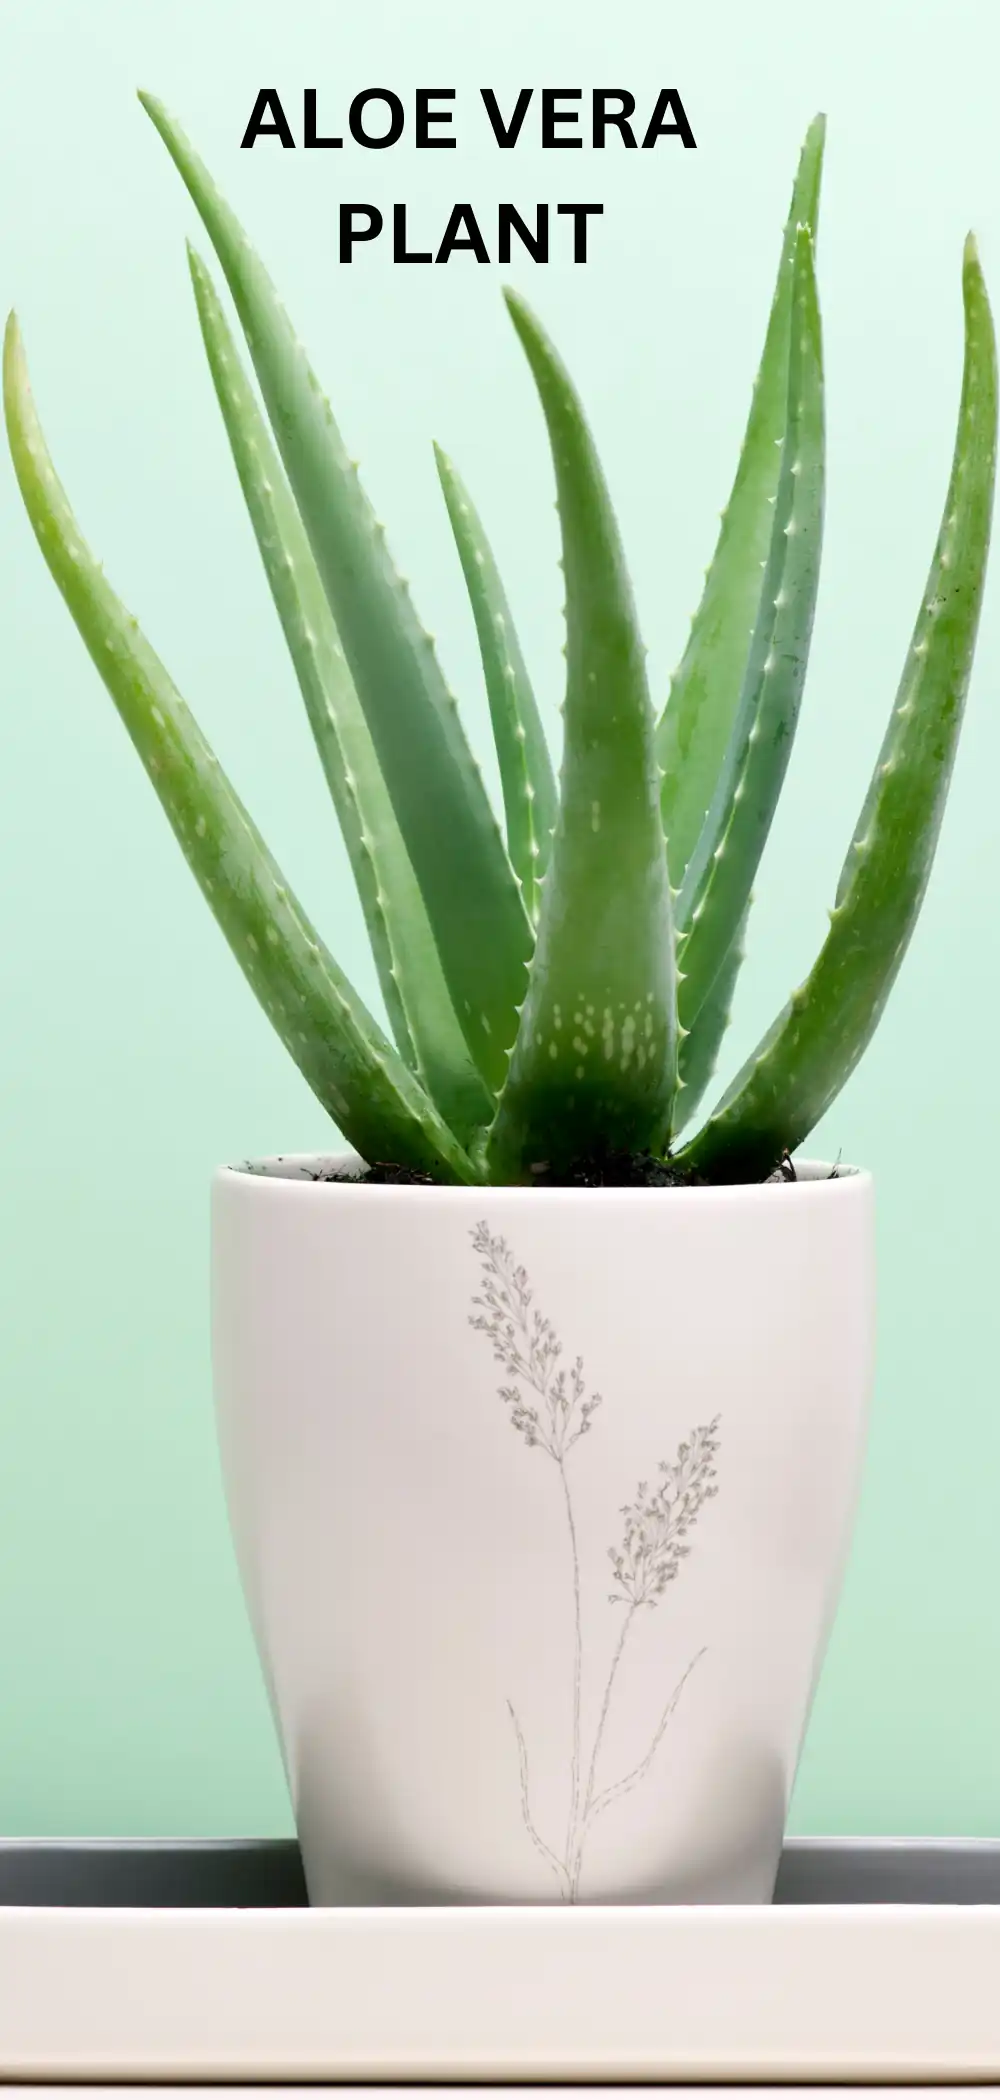 Image of Aloe vera plant